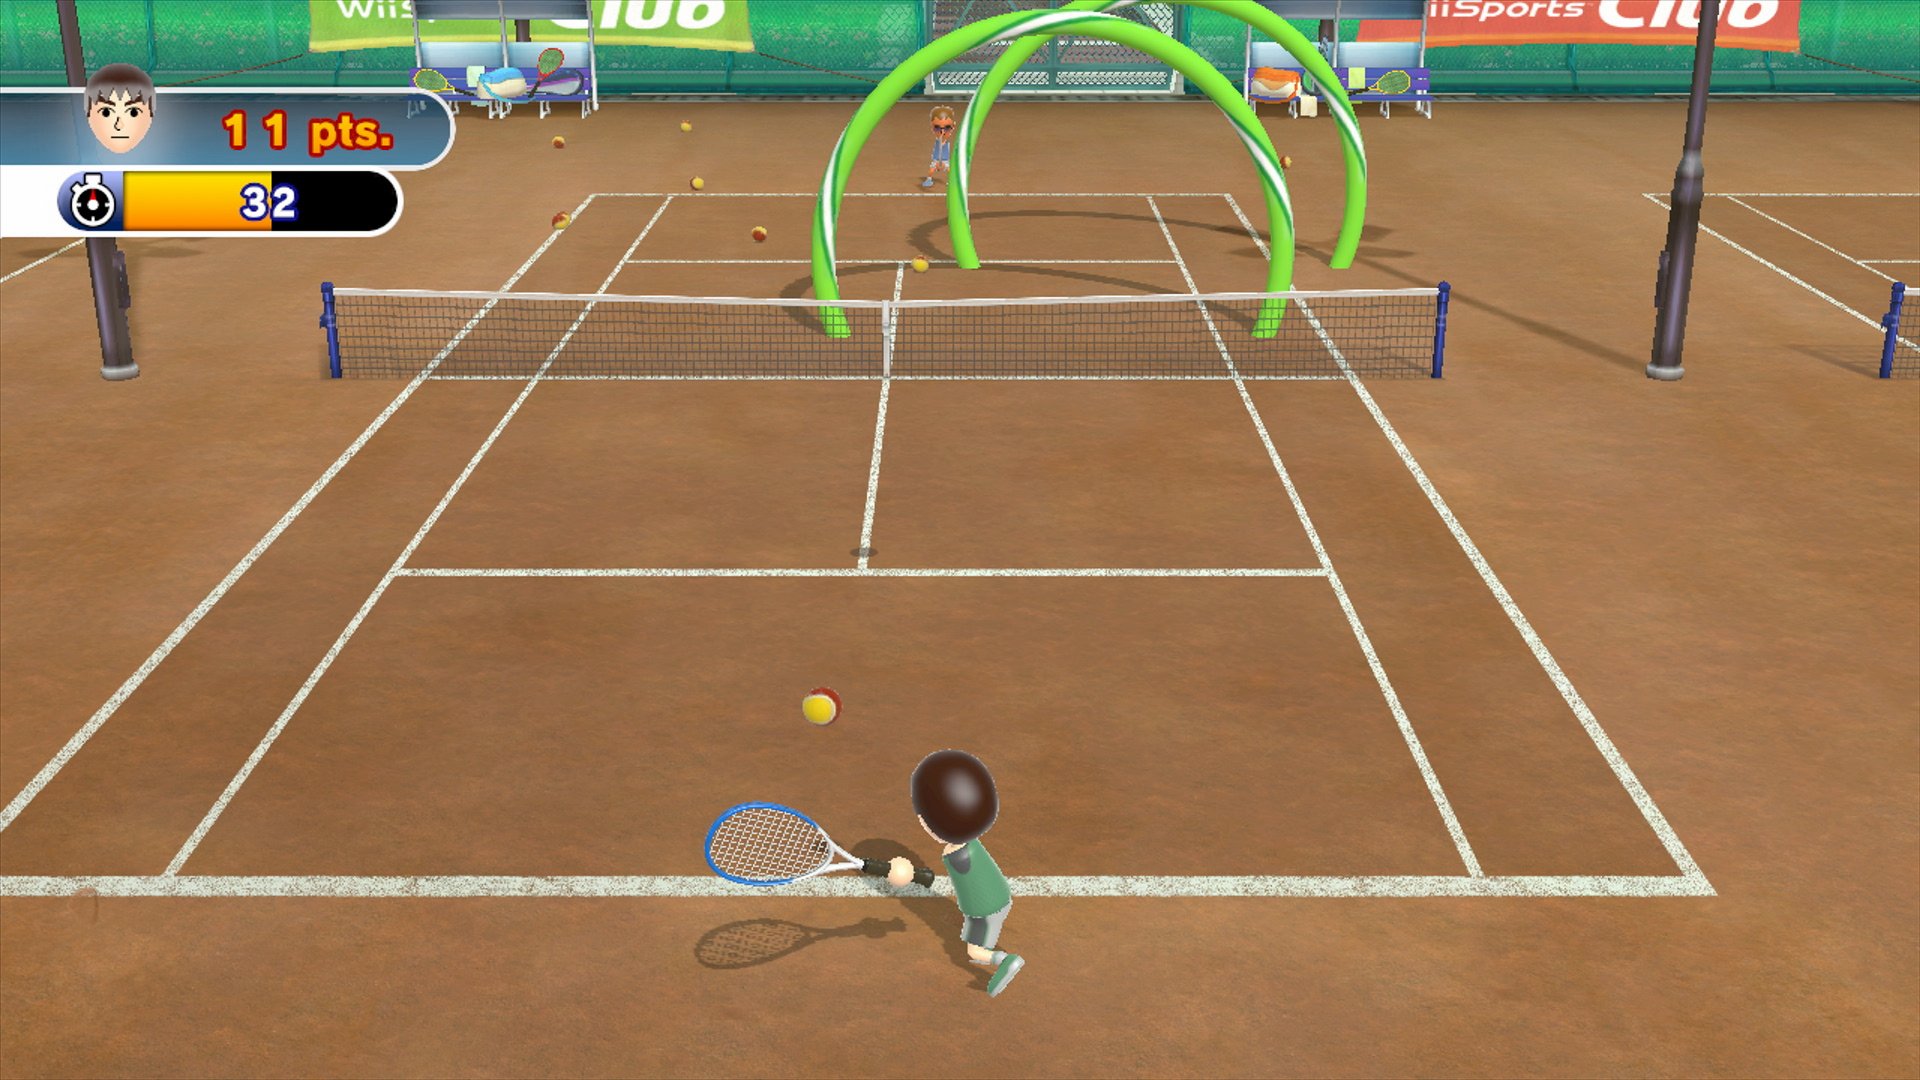 Wii Sports Club: Tennis (Wii U eShop) Game Profile | News, Reviews